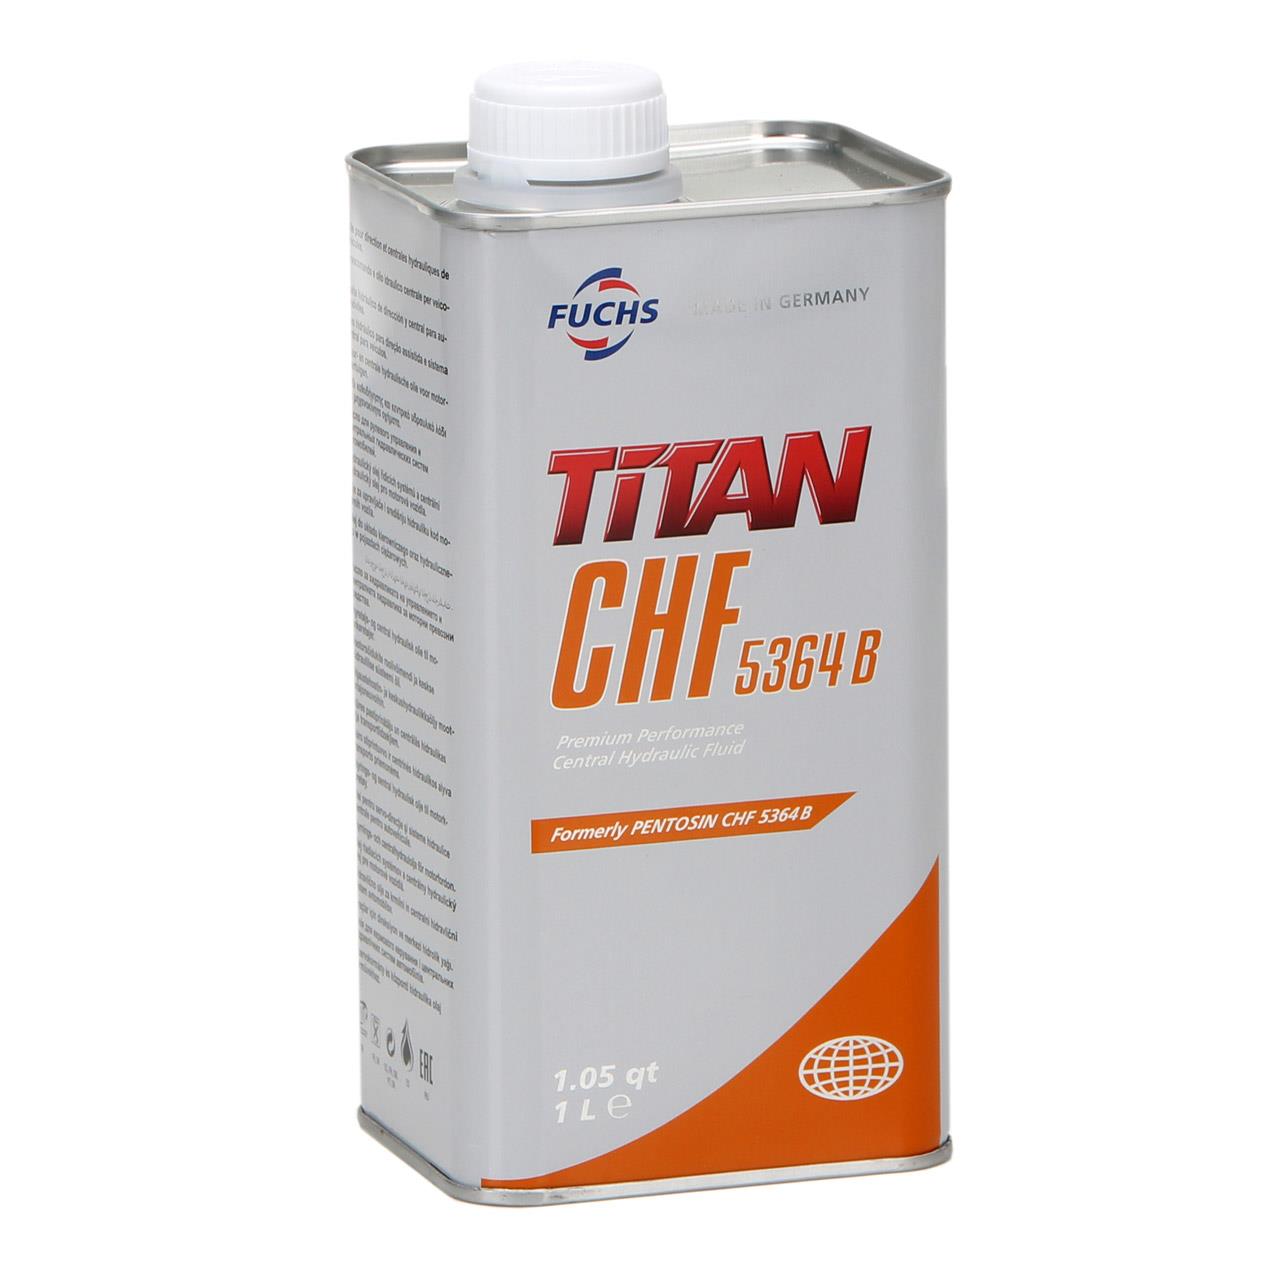 TITAN CHF 5364 B